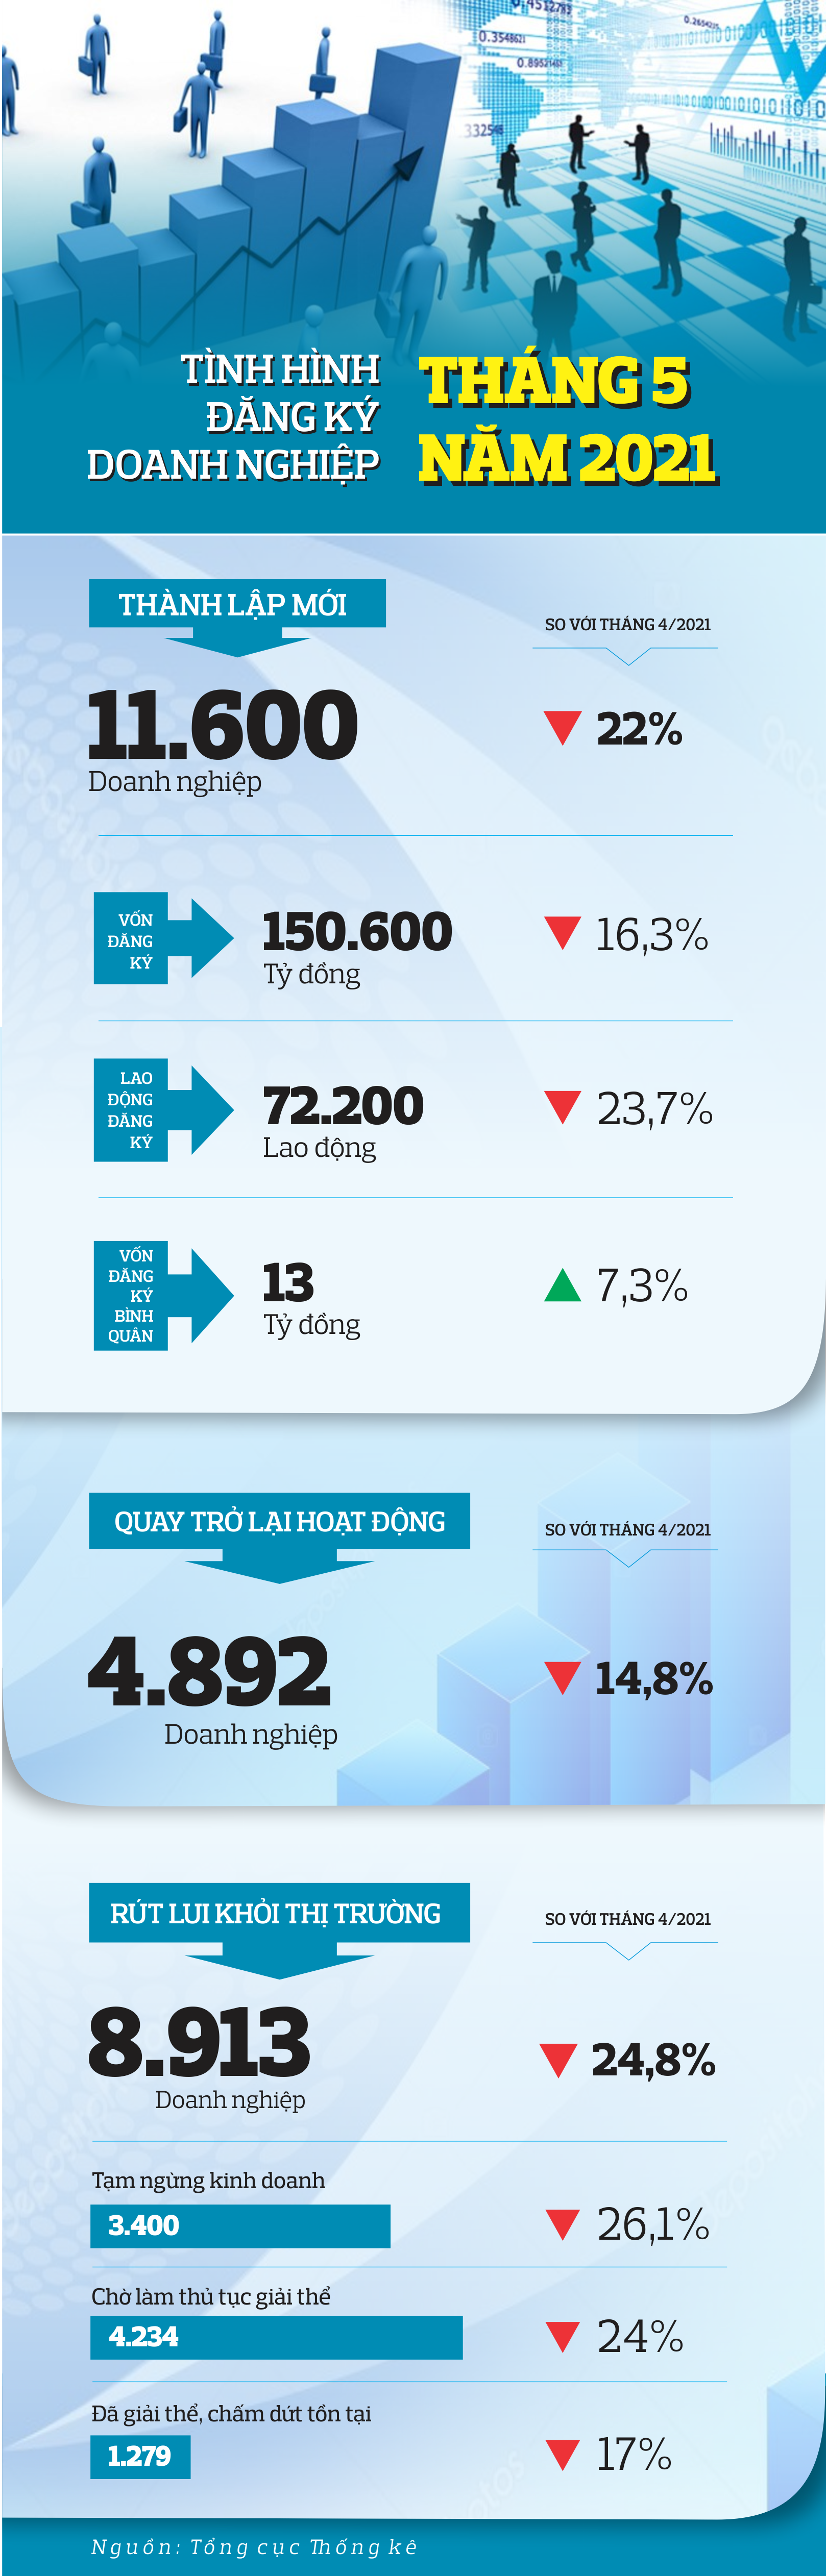 infographic tinh hinh dang ky doanh nghiep thang 52021